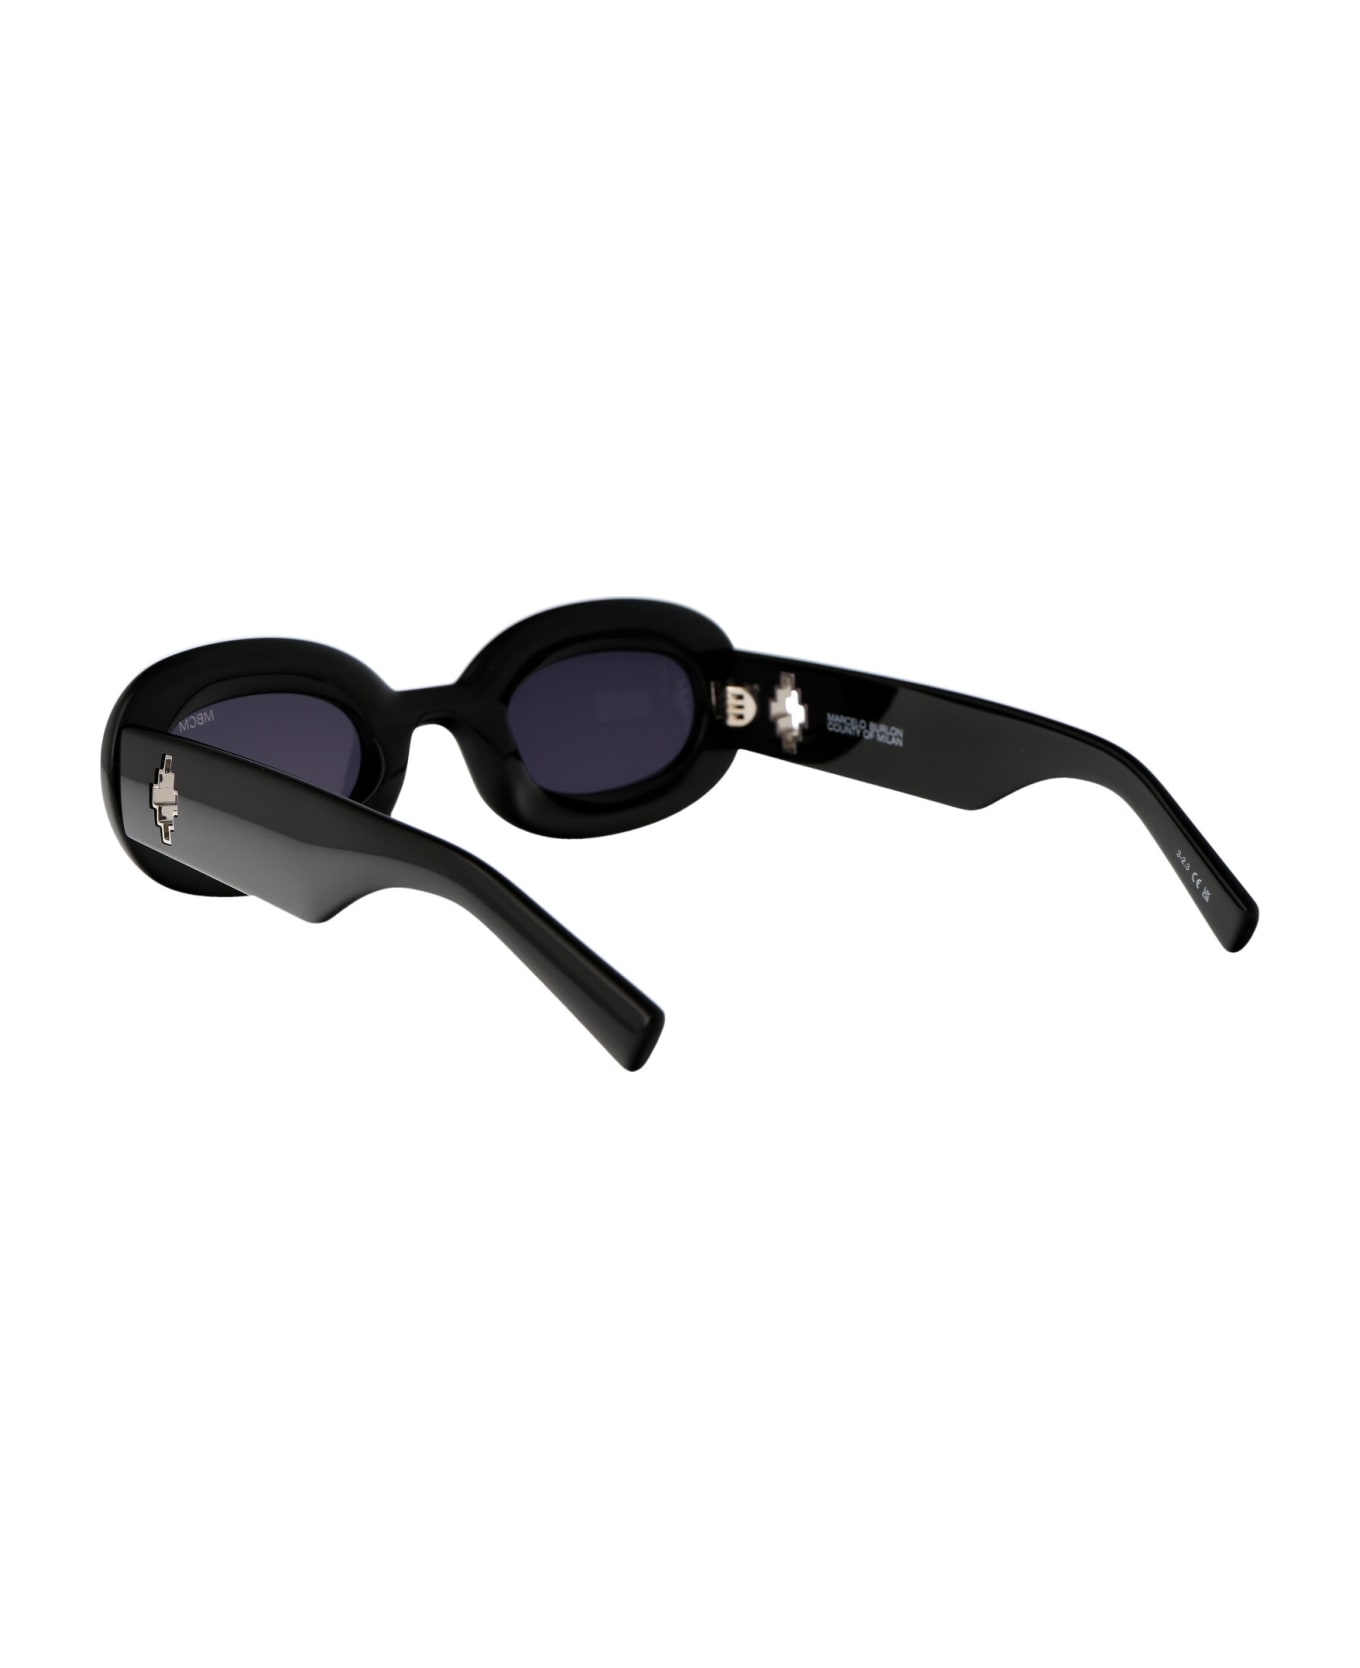 Marcelo Burlon Maula Sunglasses - 1007 BLACK サングラス